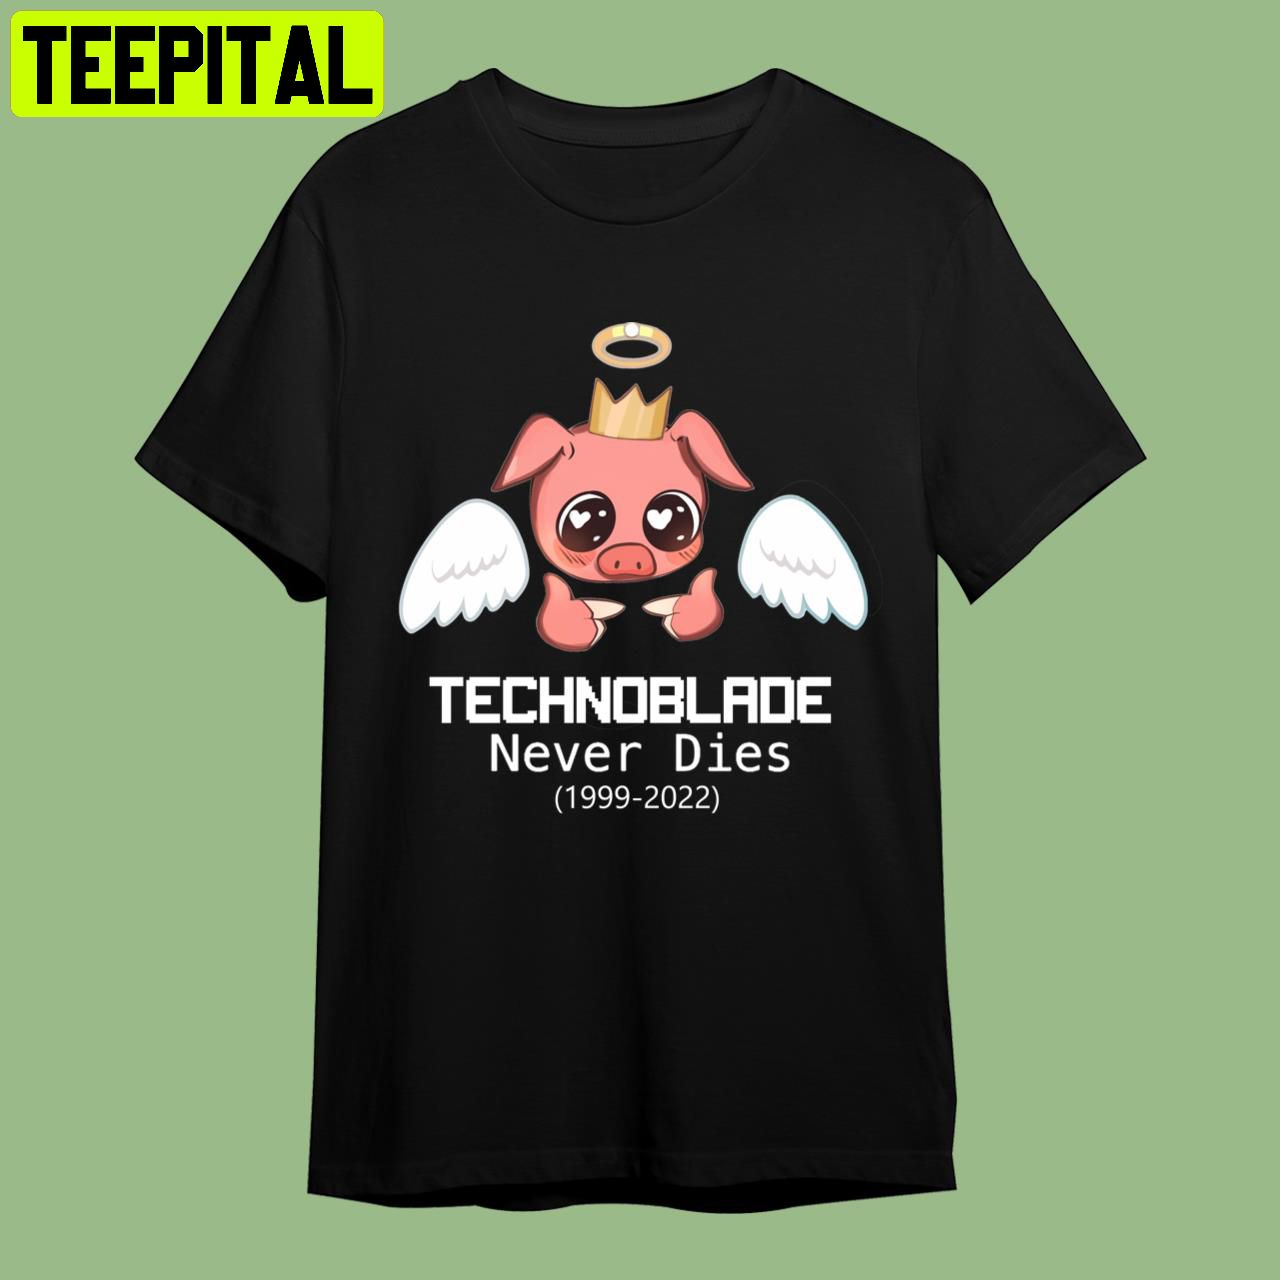 Technoblade never dies shirt by Aniviastore - Issuu